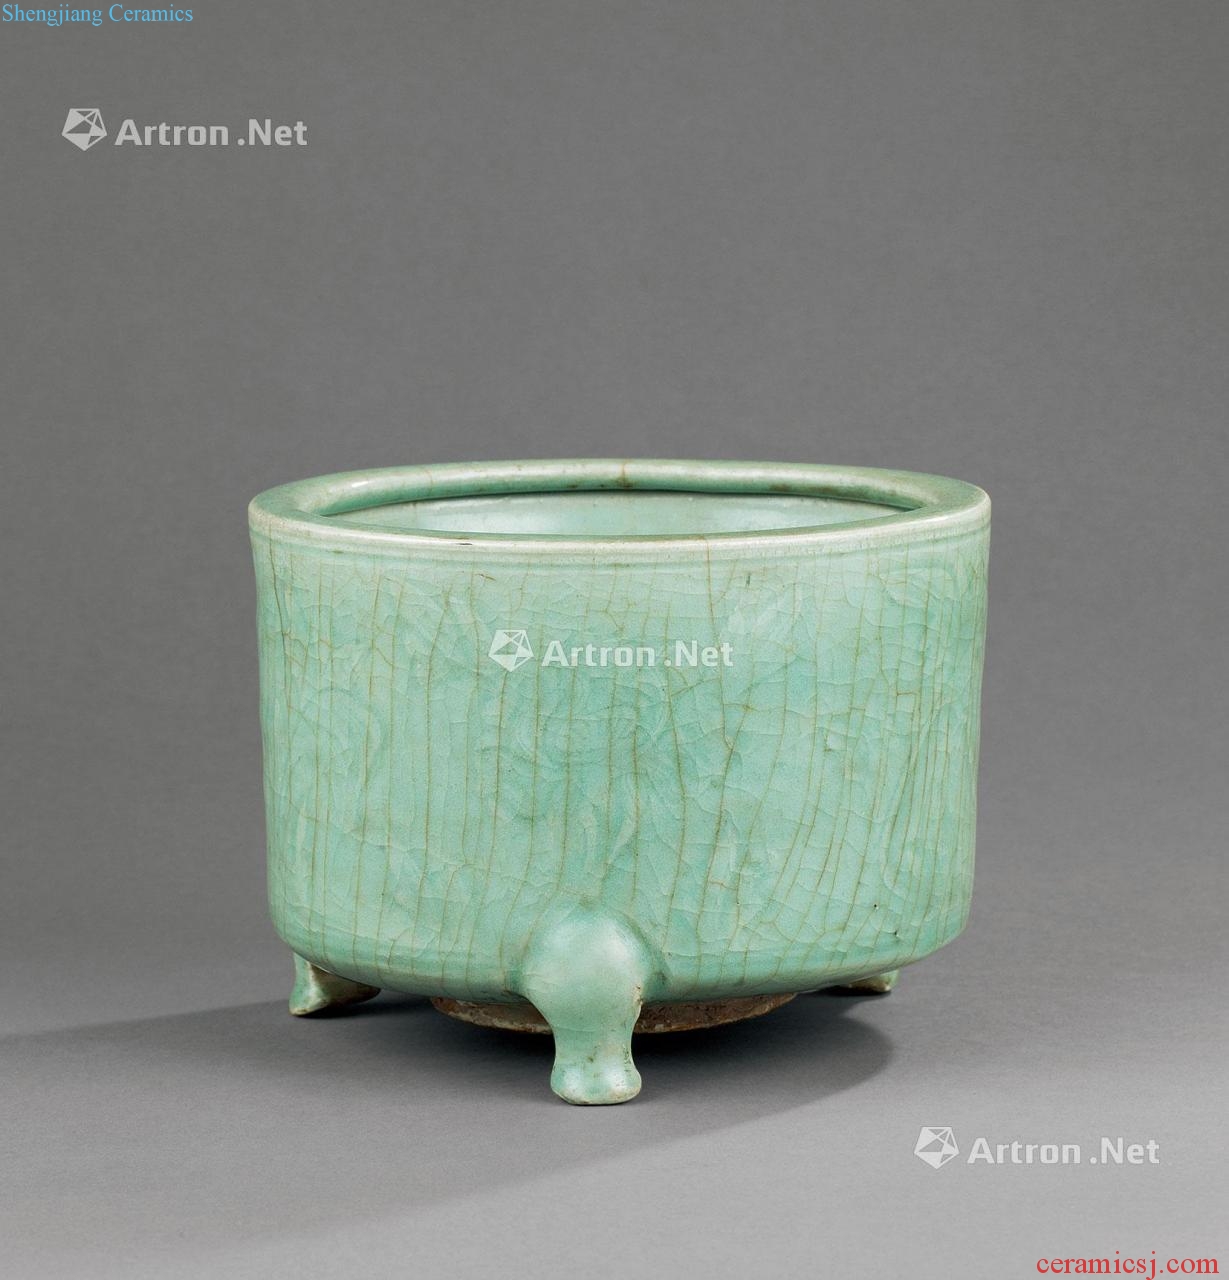 In the Ming dynasty (1368-1644), celadon three-legged incense burner